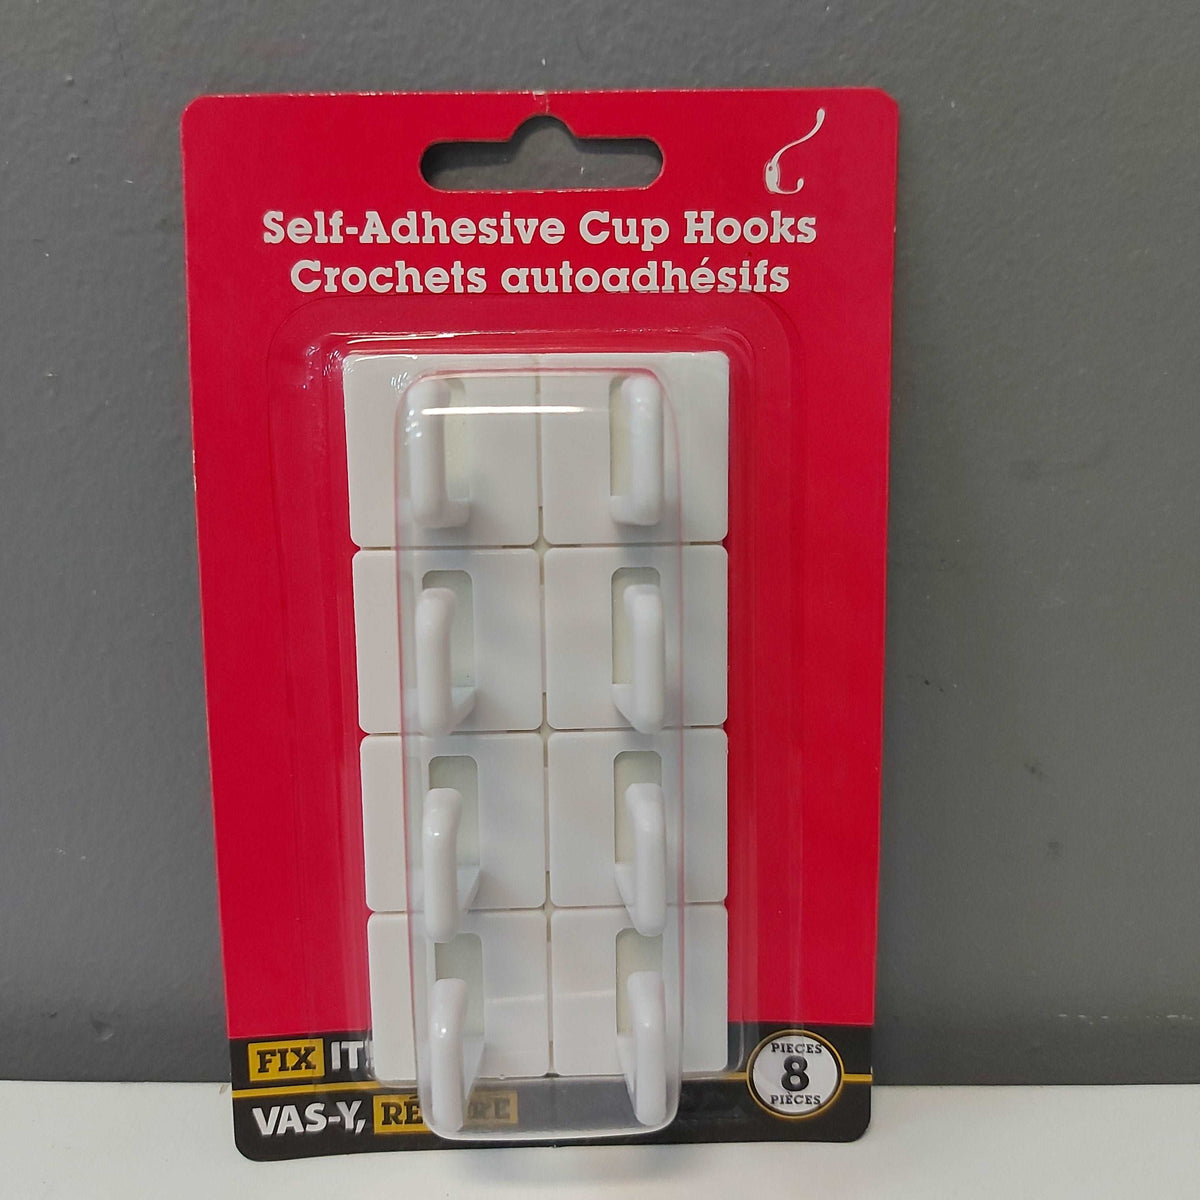 Self-Adhesive Cup Hooks